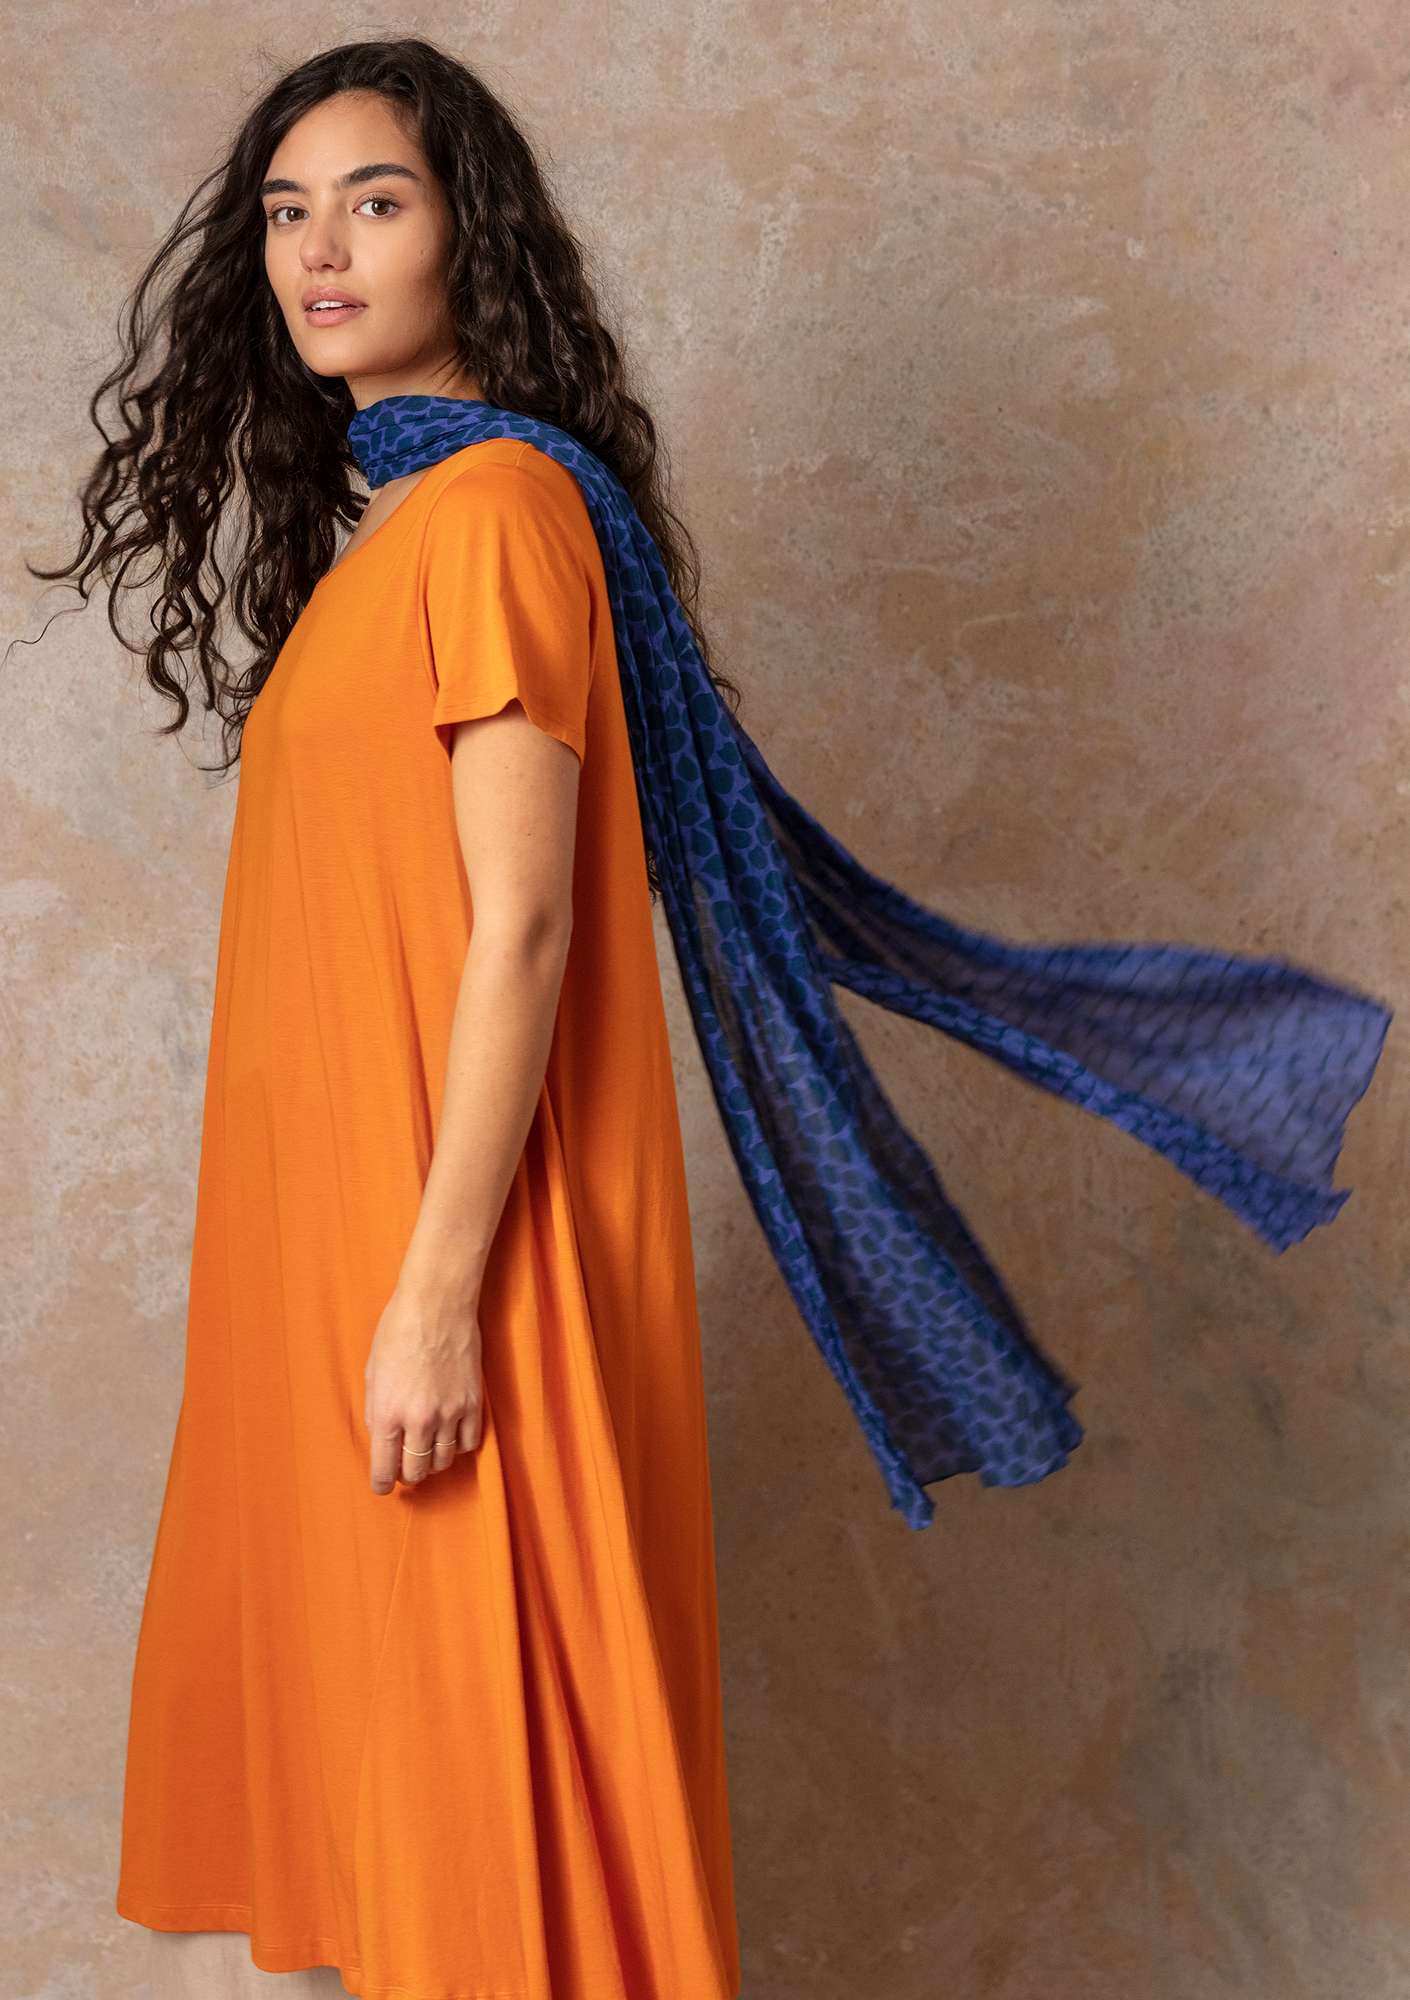 “Serafina  organic cotton shawl indigo/patterned